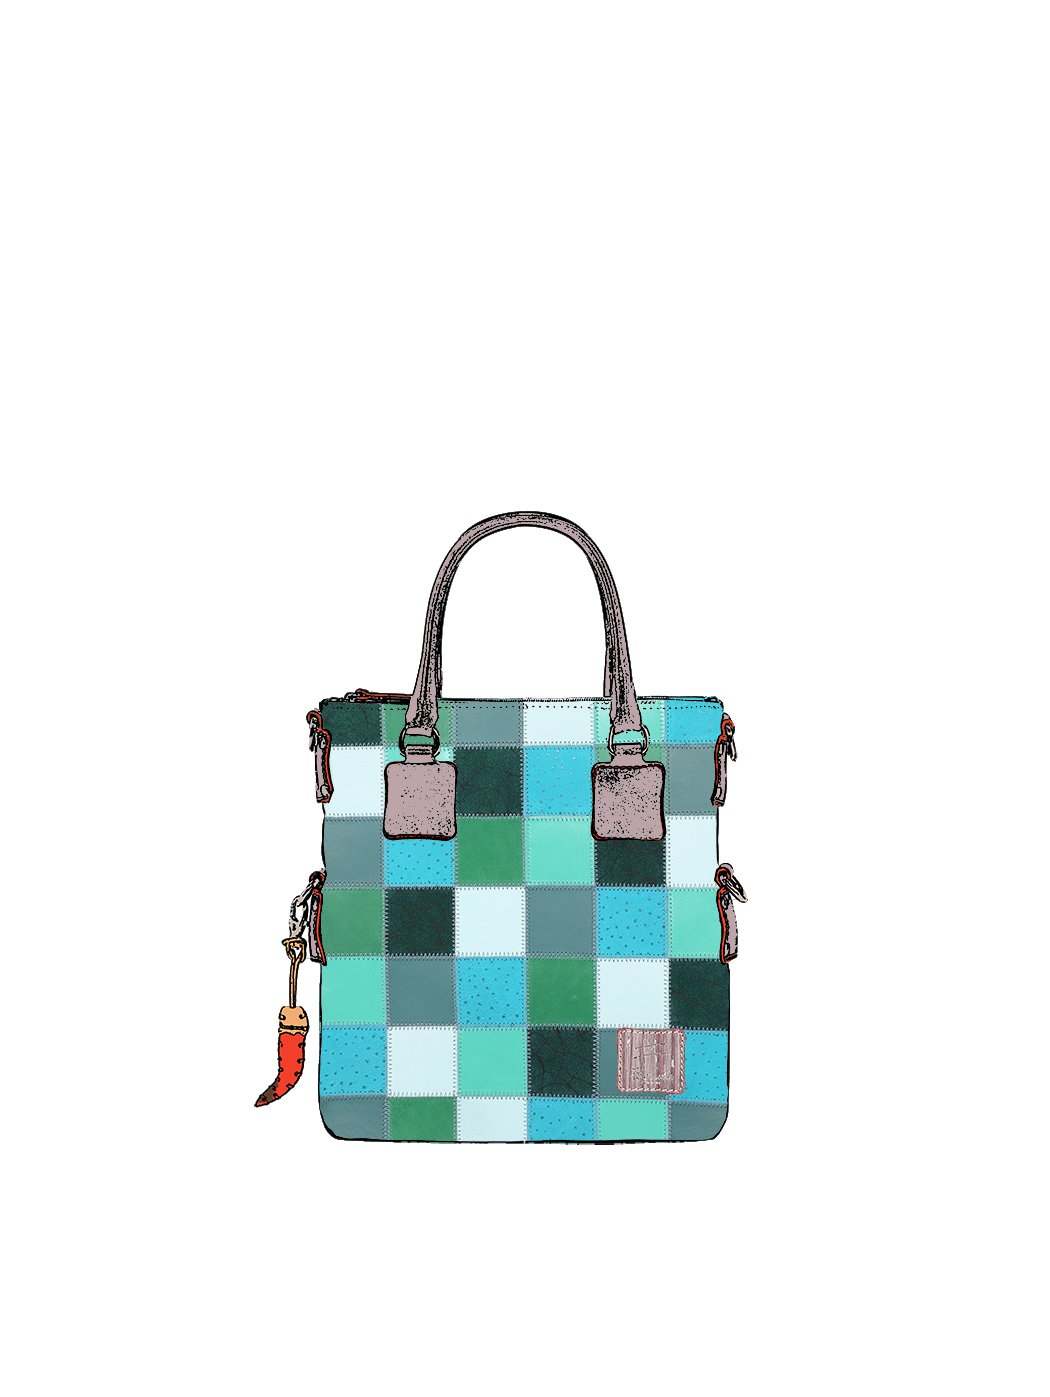 Дизайнерская мини - сумка из коллекции Fortunata в стиле пэчворк зелено - бирюзового цвета